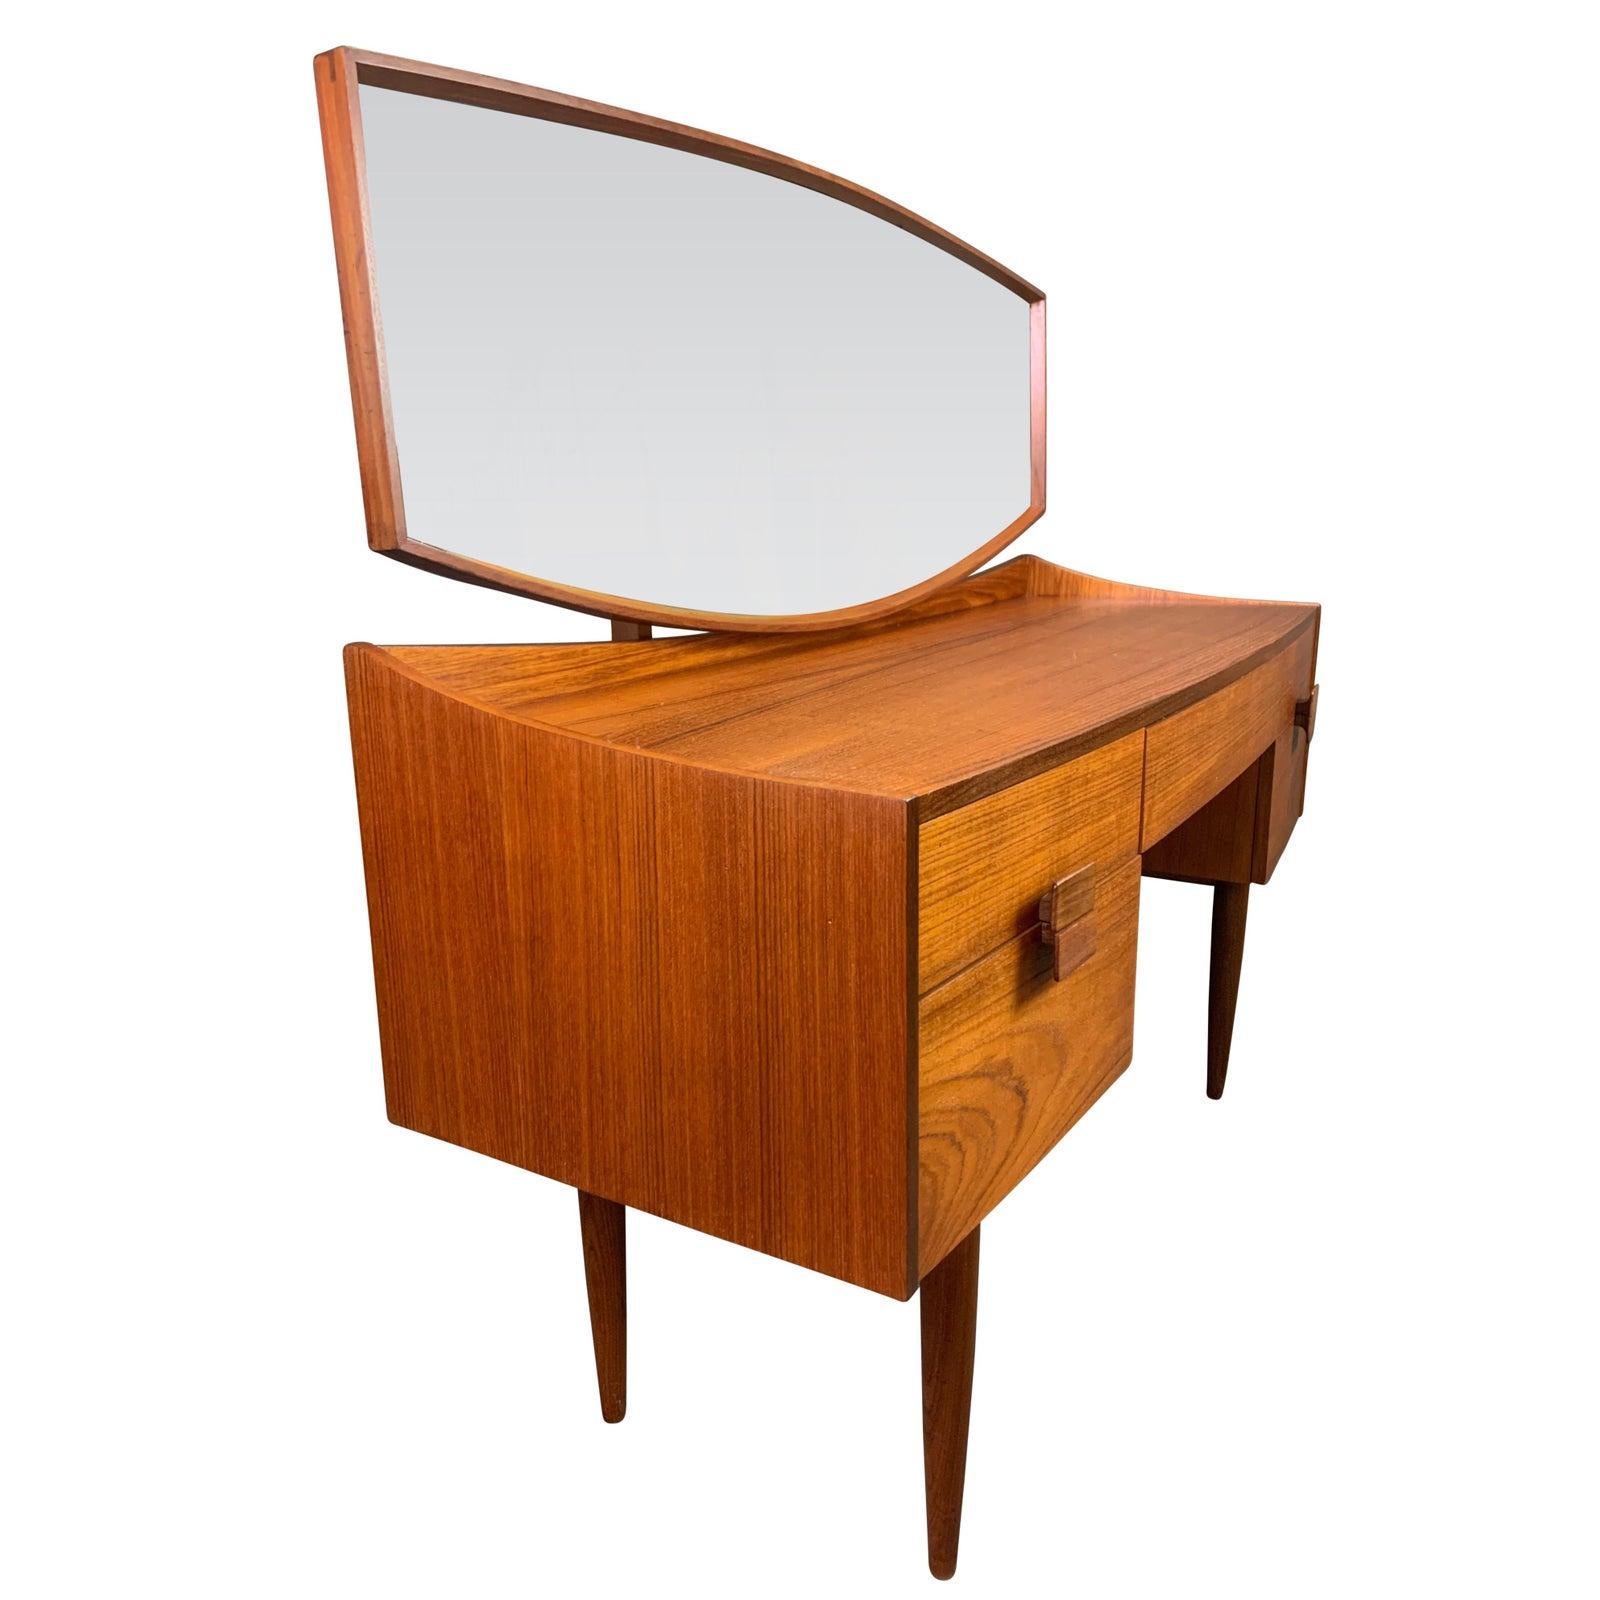 Woodwork Vintage British Midcentury Teak Vanity and Mirror by Kofod Larsen for G Plan